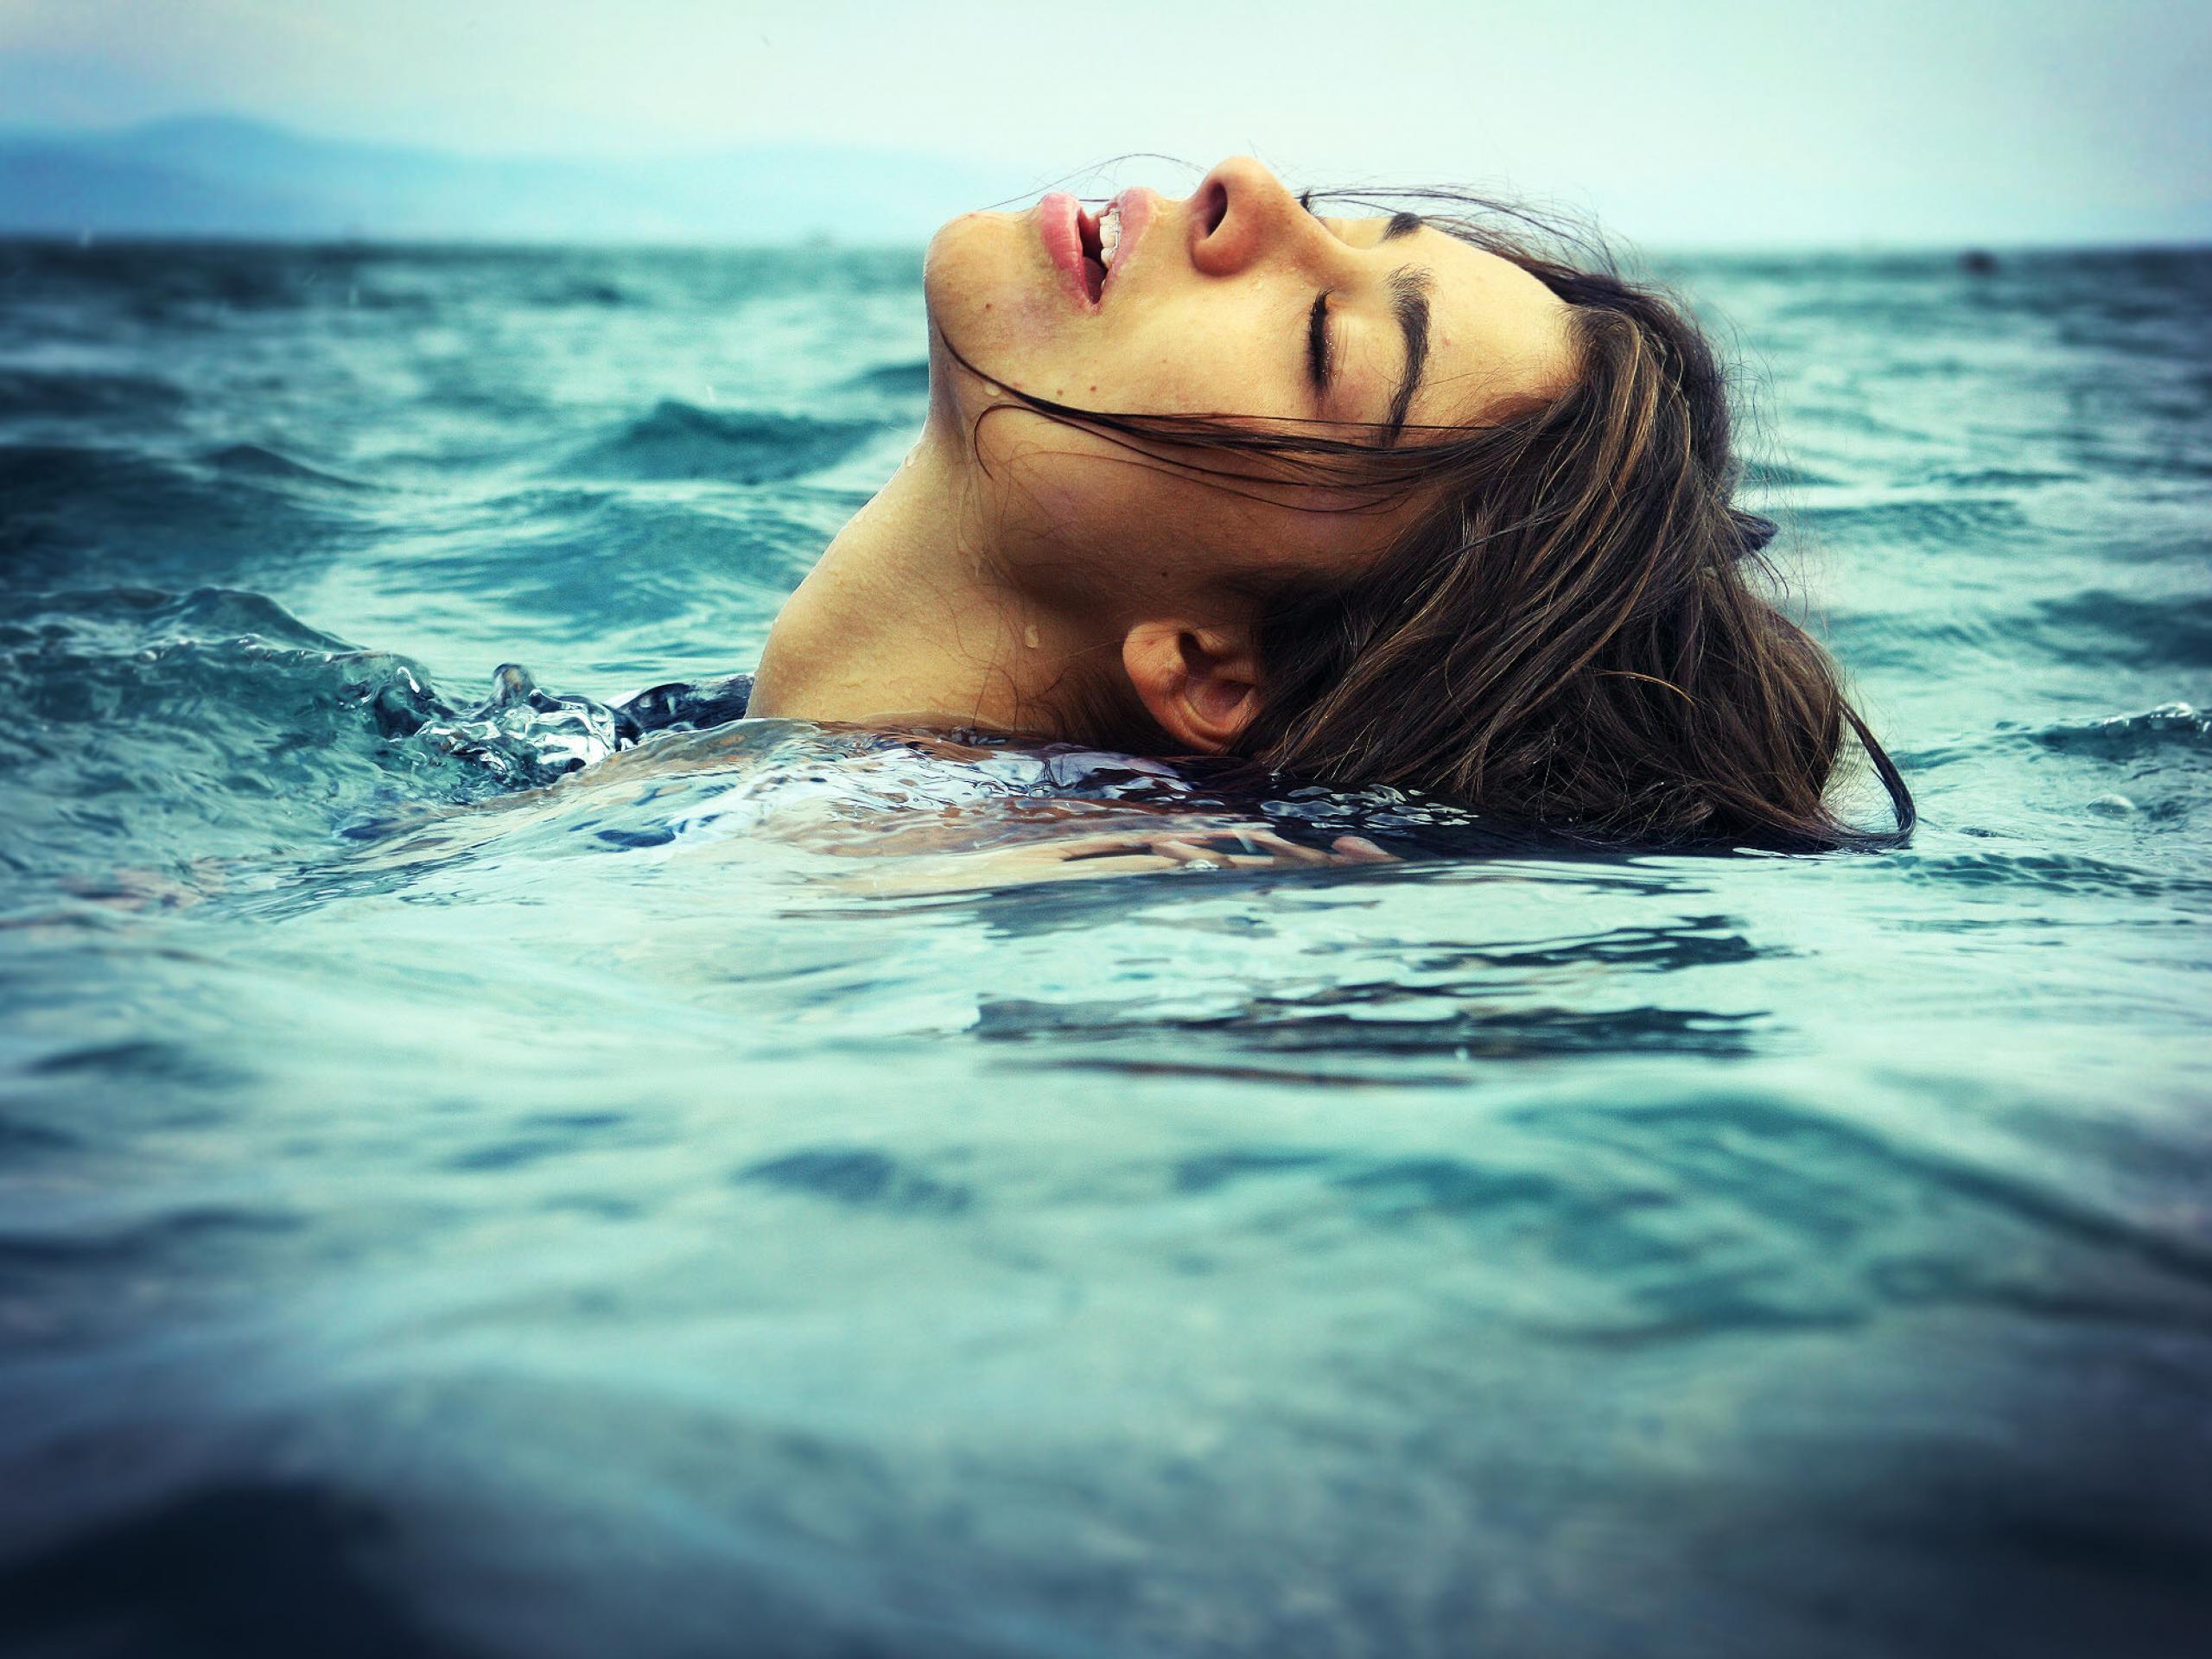 Сама удовольствие девушка. Девушка плывет в море. Девушка и океан. Девушка в воде.